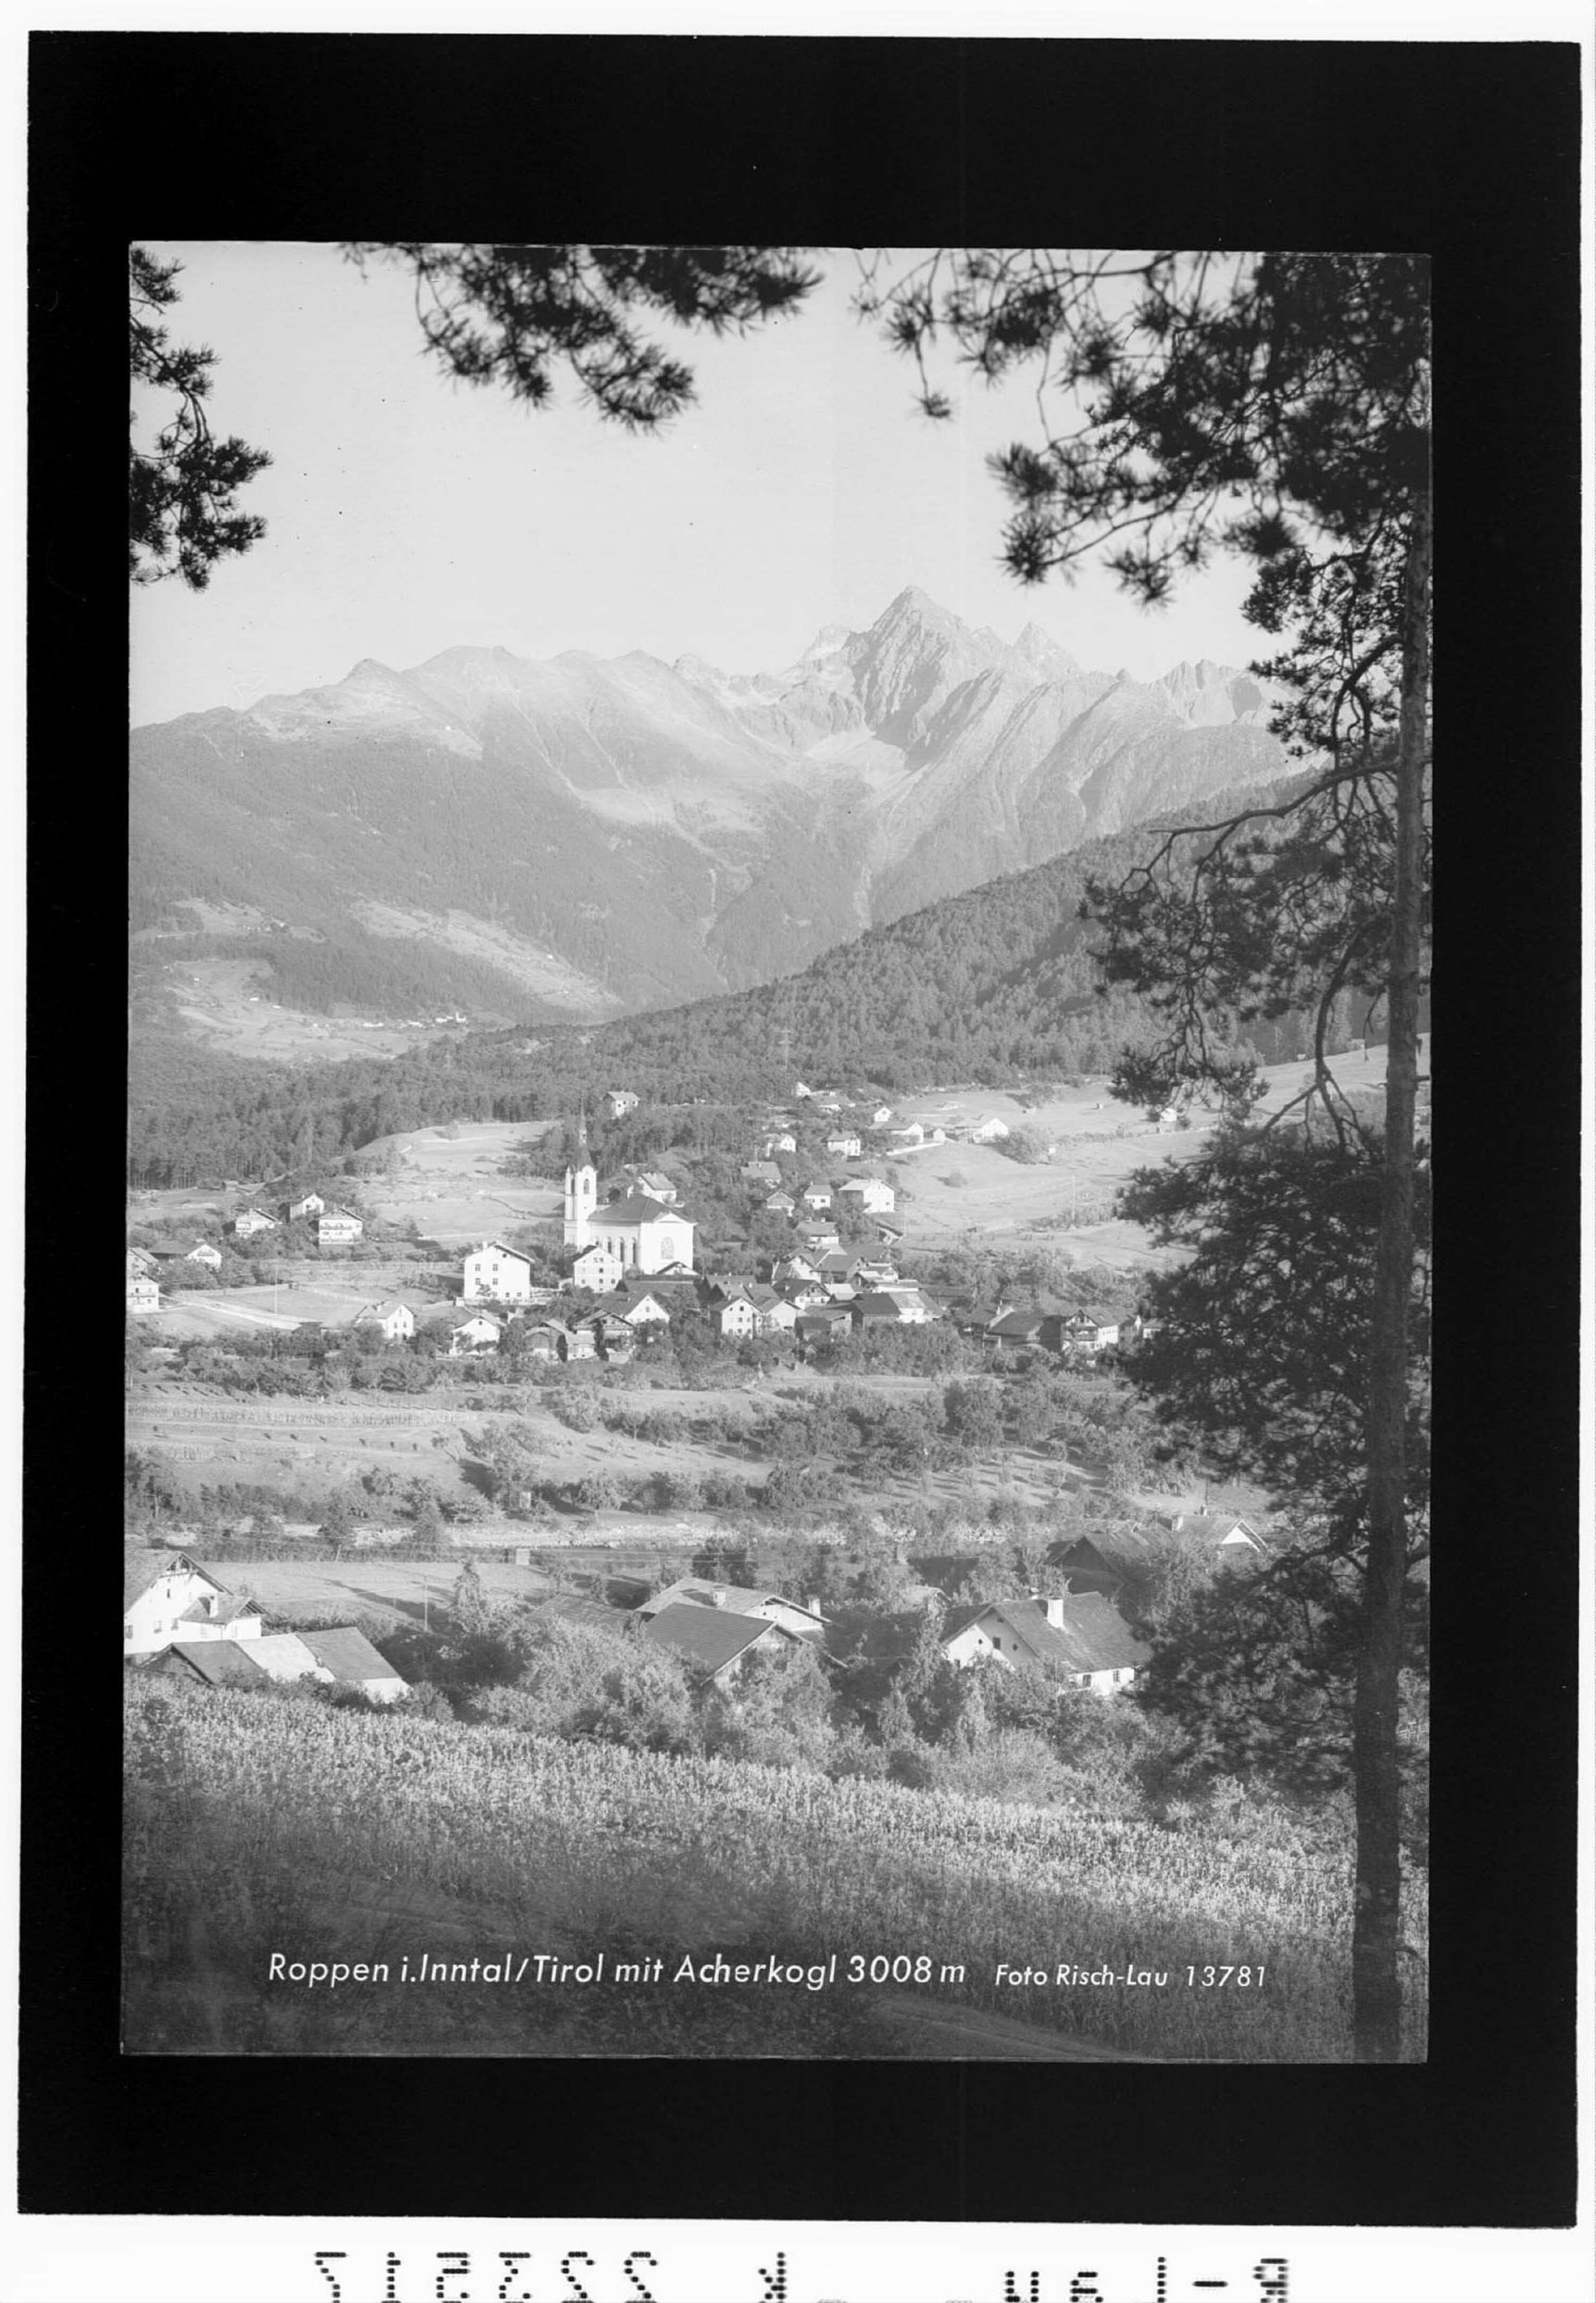 Roppen im Inntal / Tirol mit Acherkogel 3008 m></div>


    <hr>
    <div class=